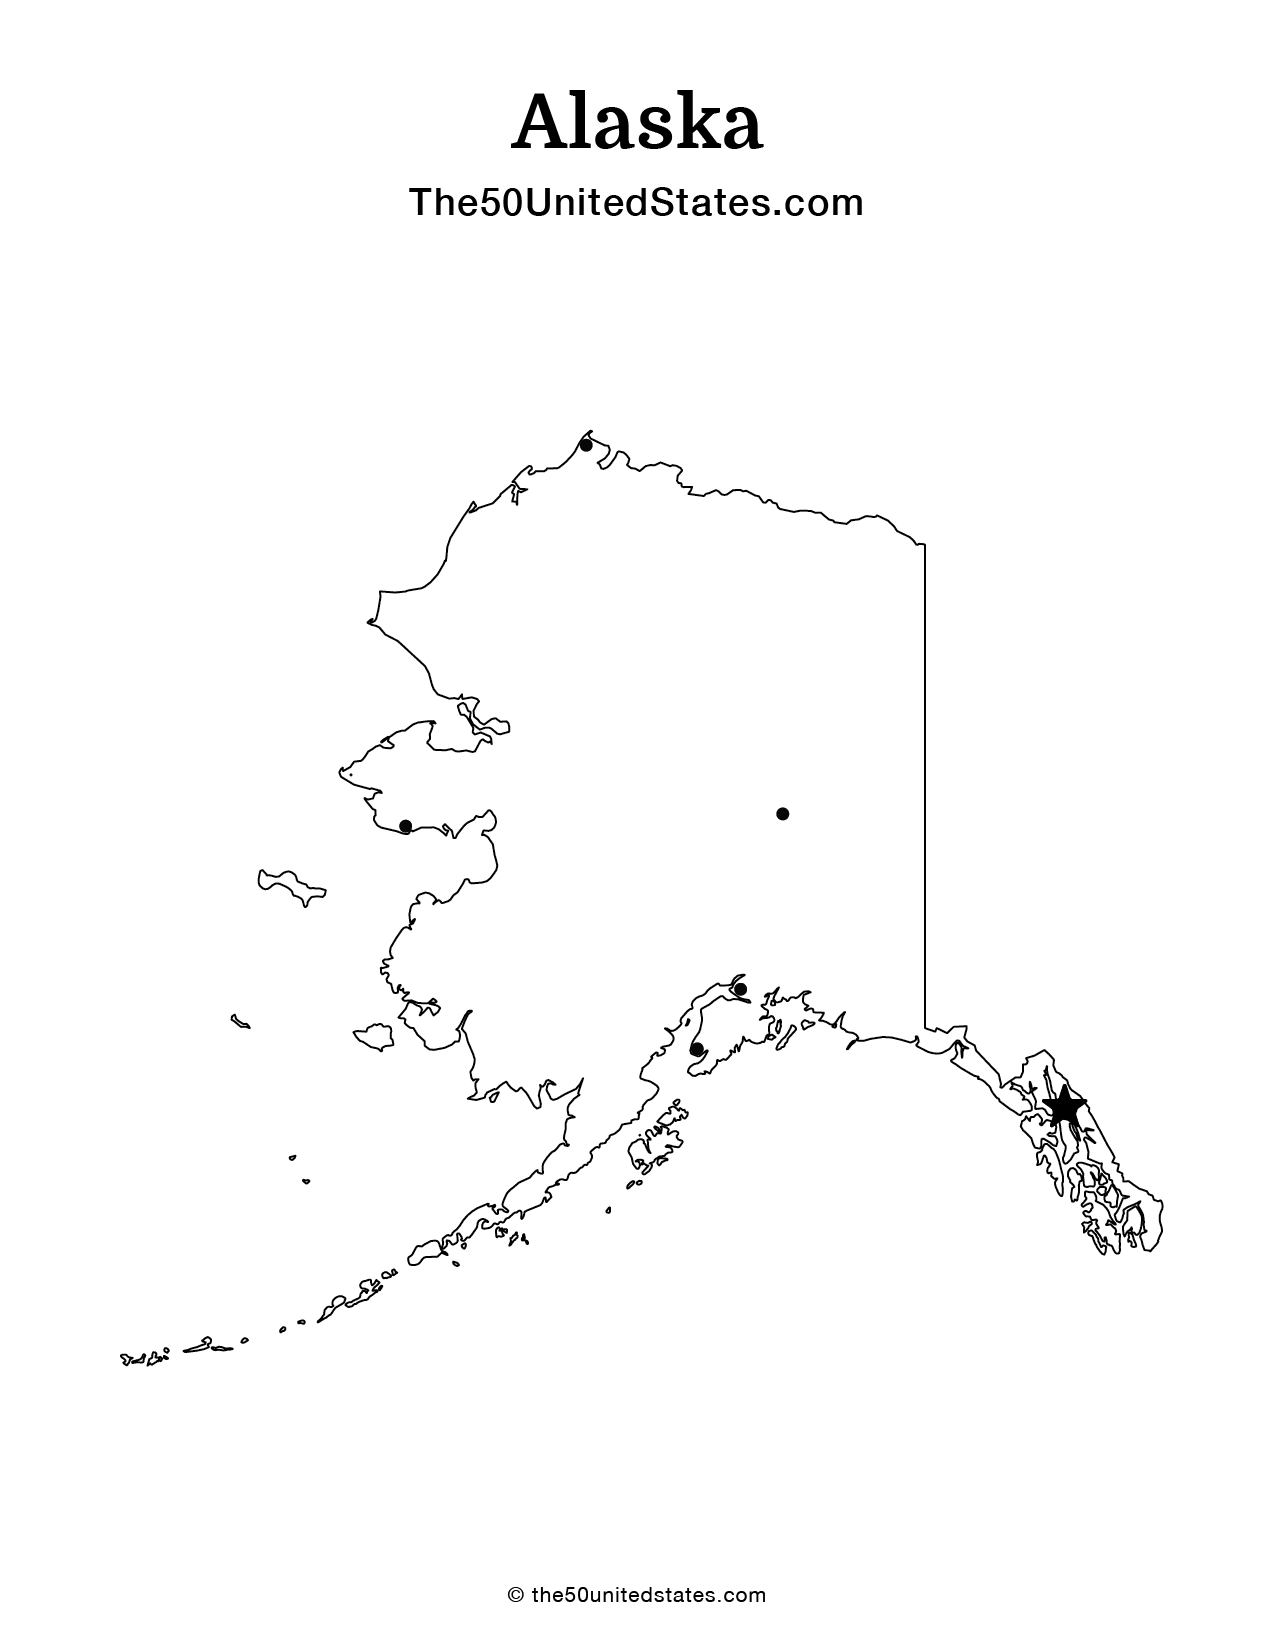 Alaska with Cities (Blank)